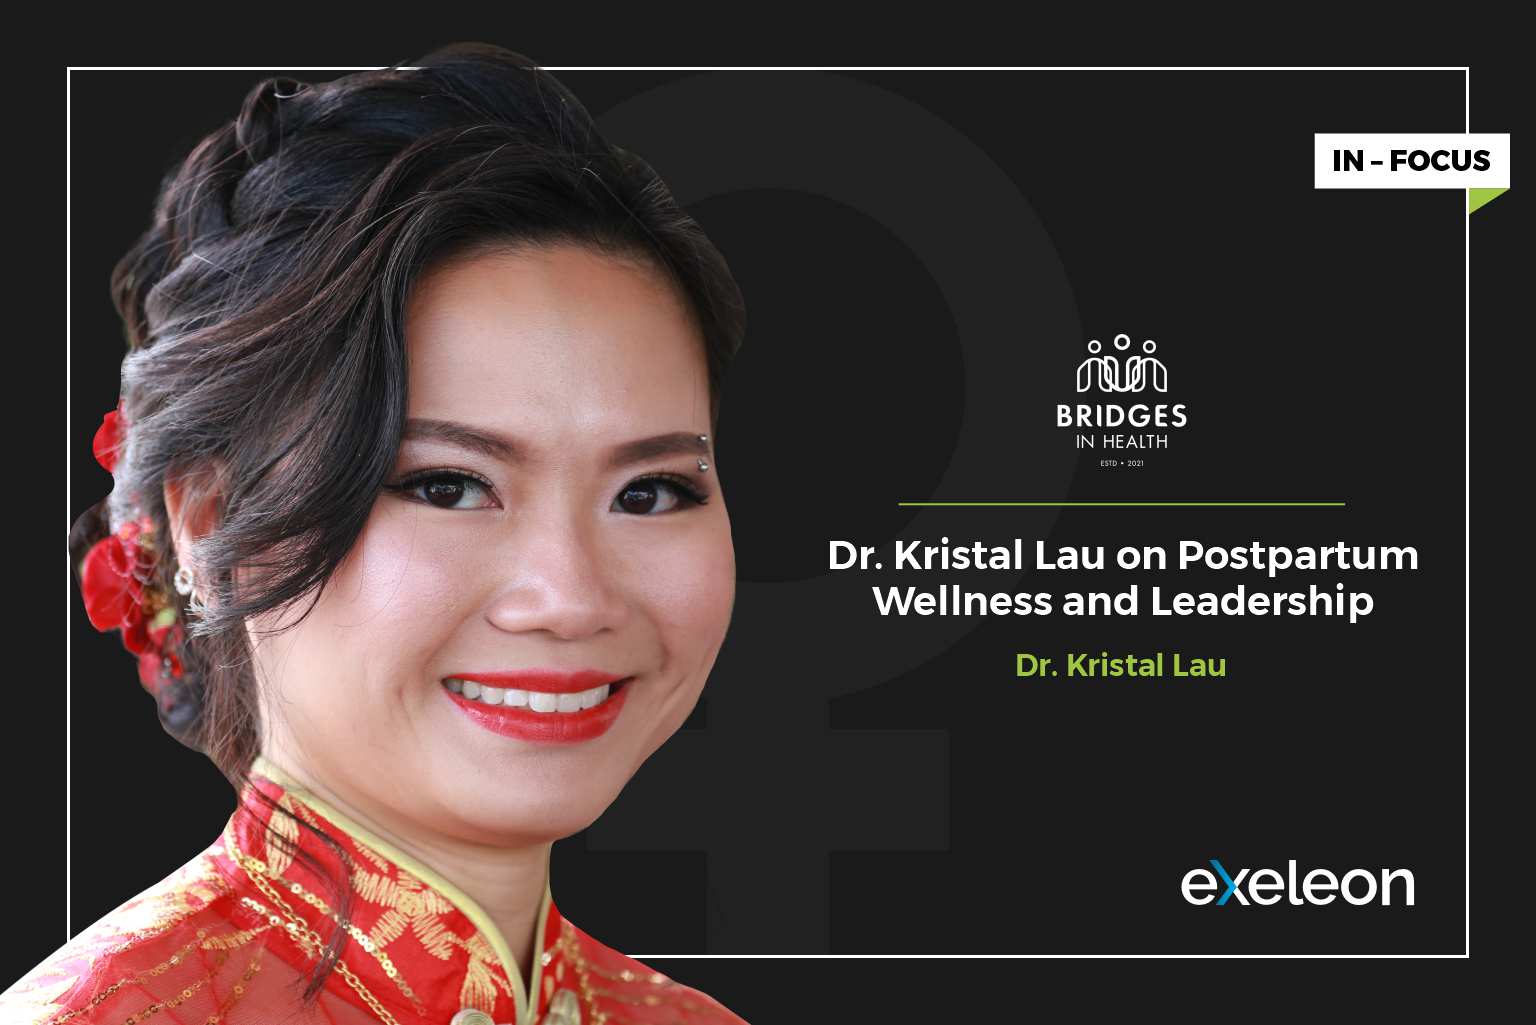 Dr. Kristal Lau interview on Exeleon Magazine